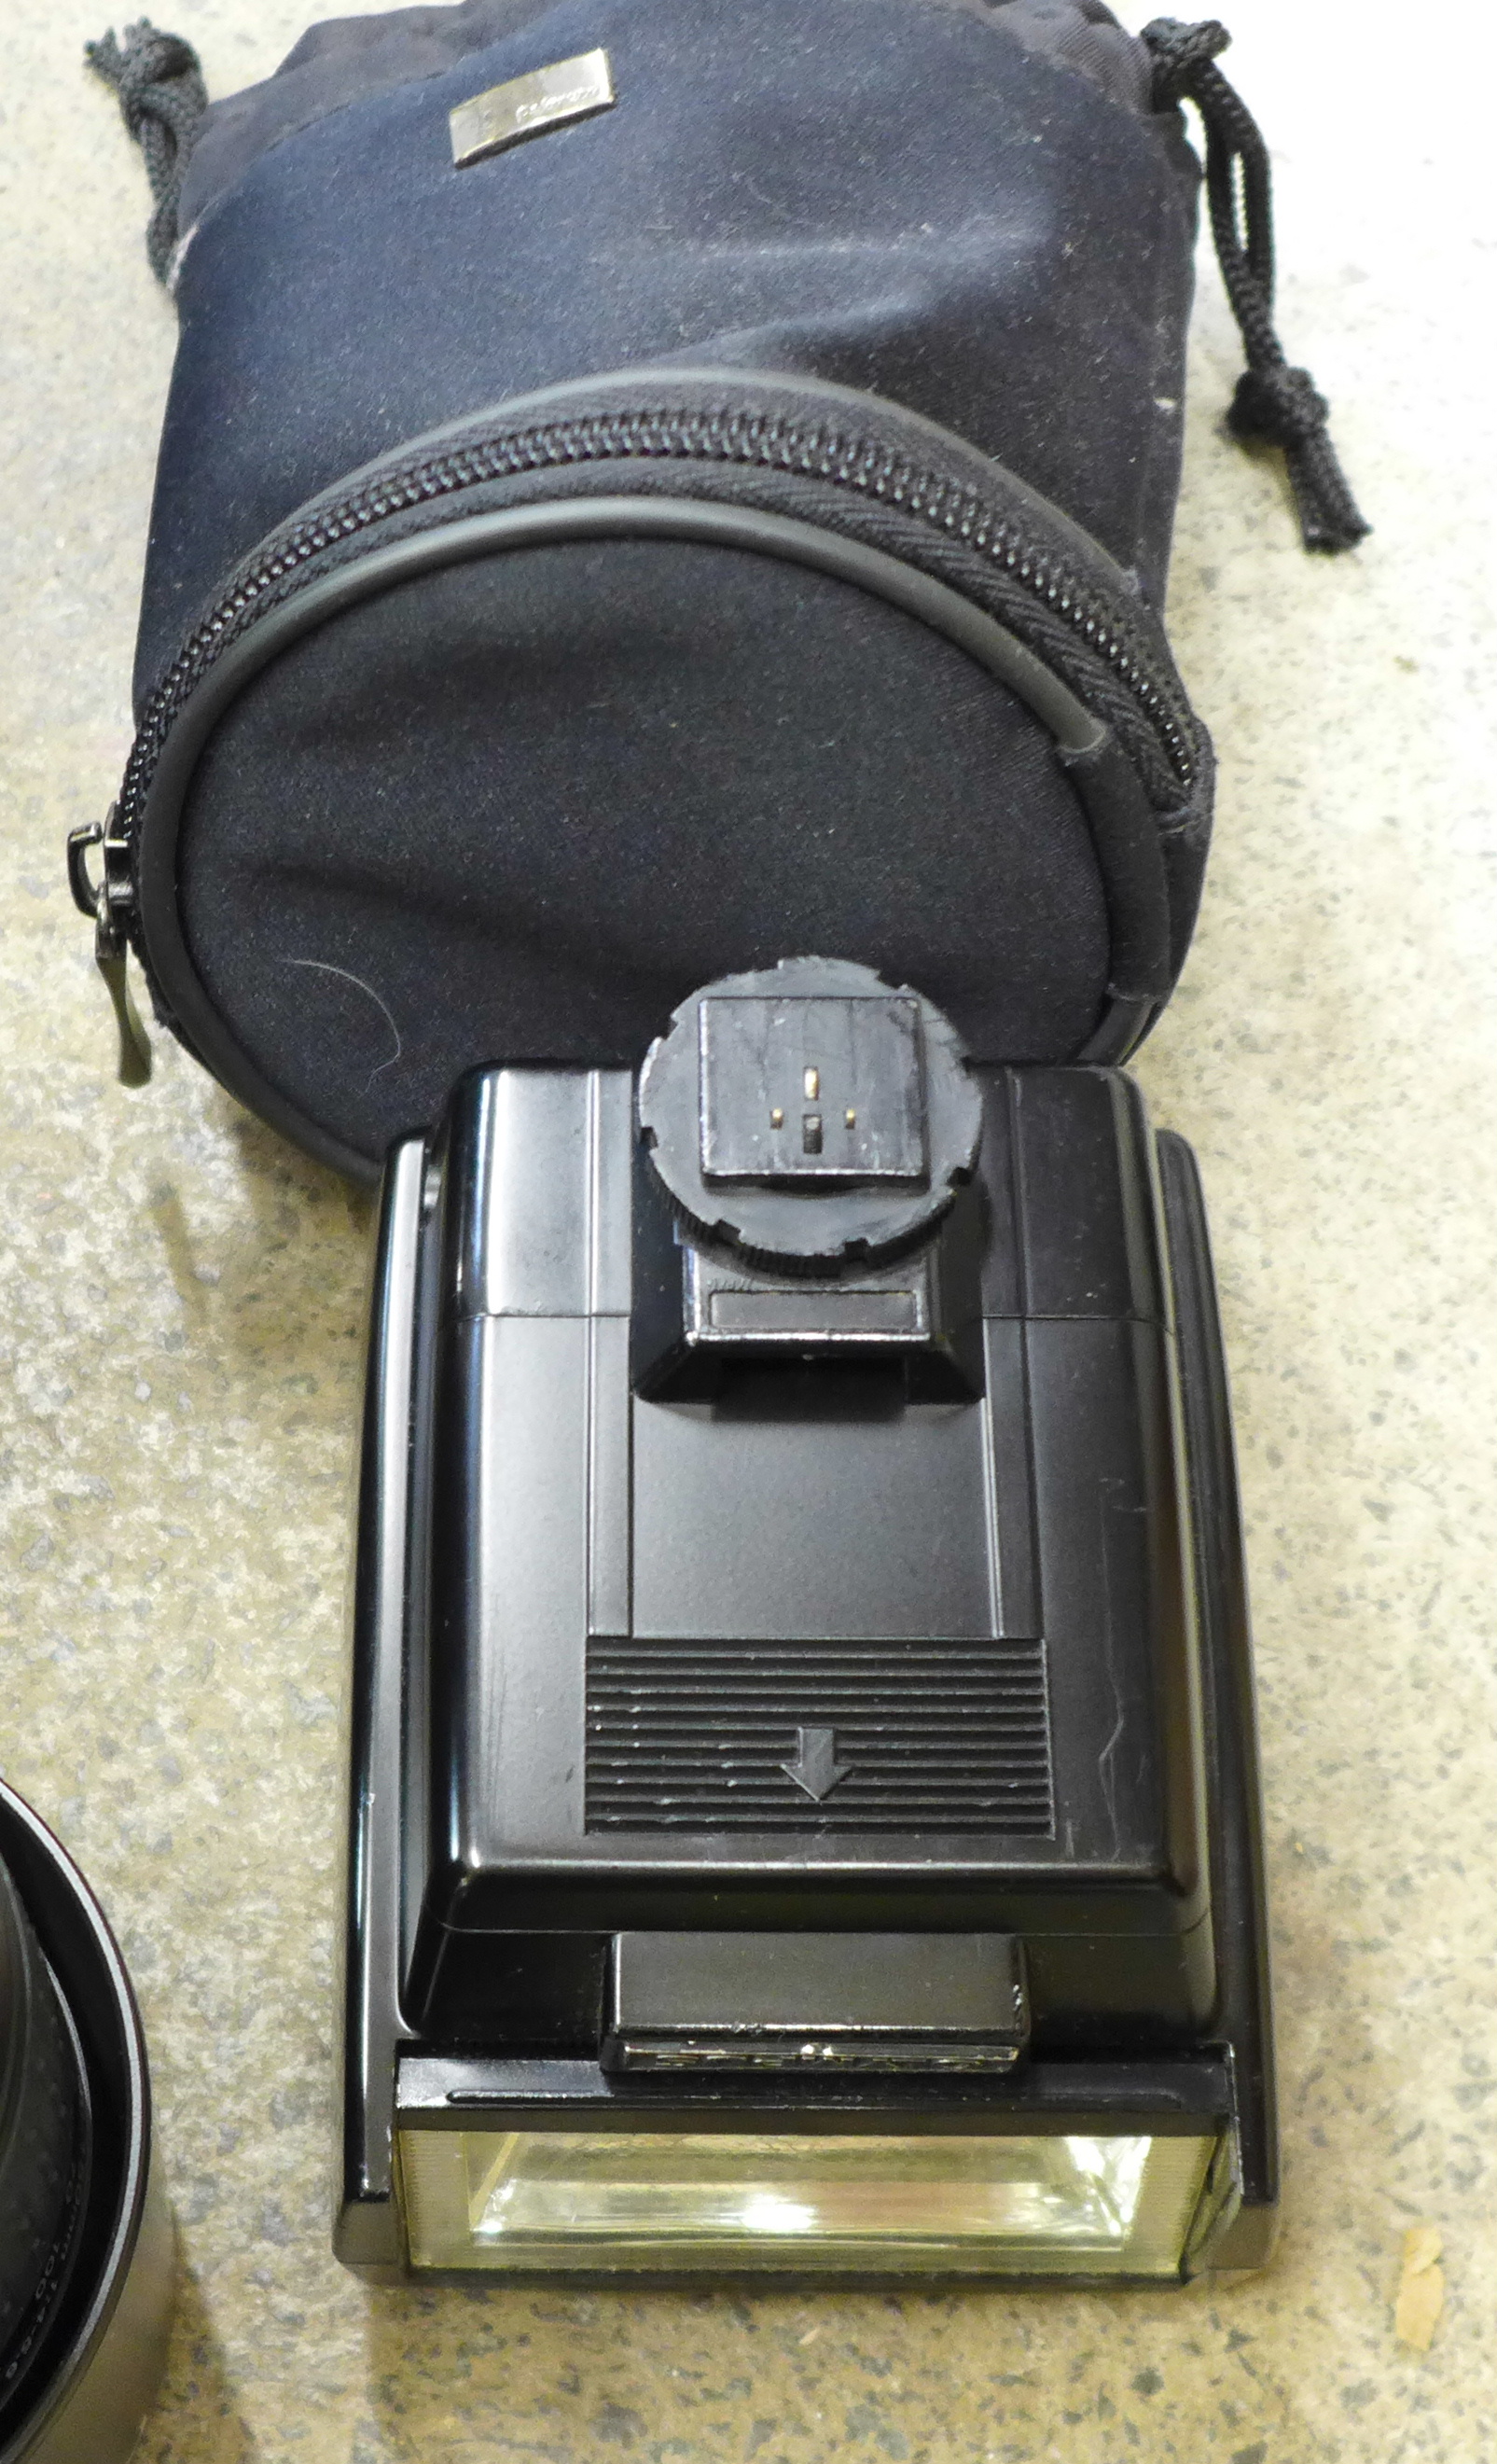 Six Olympus camera lenses including Zuiko digital ED 70-300mm, 200mm F4, 35mm, 28mm, 135mm, - Bild 3 aus 9